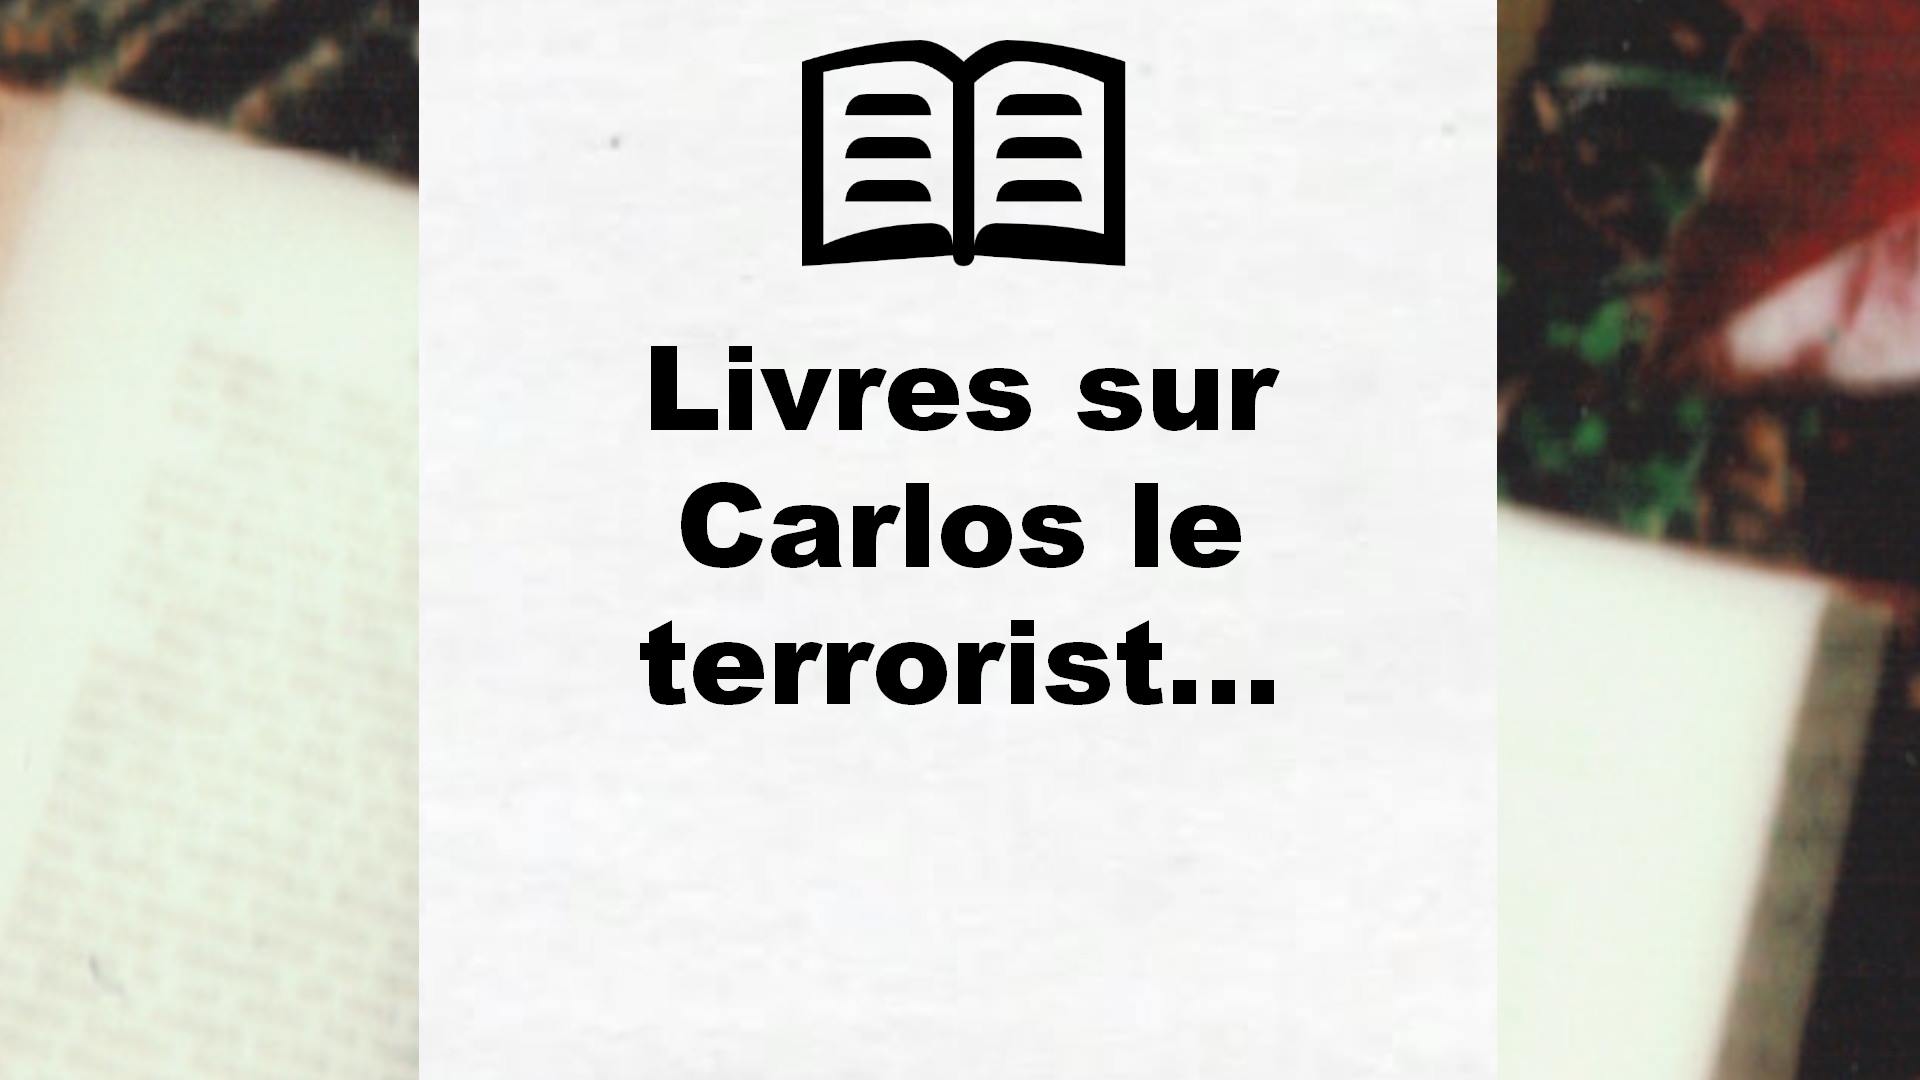 Livres sur Carlos le terroriste